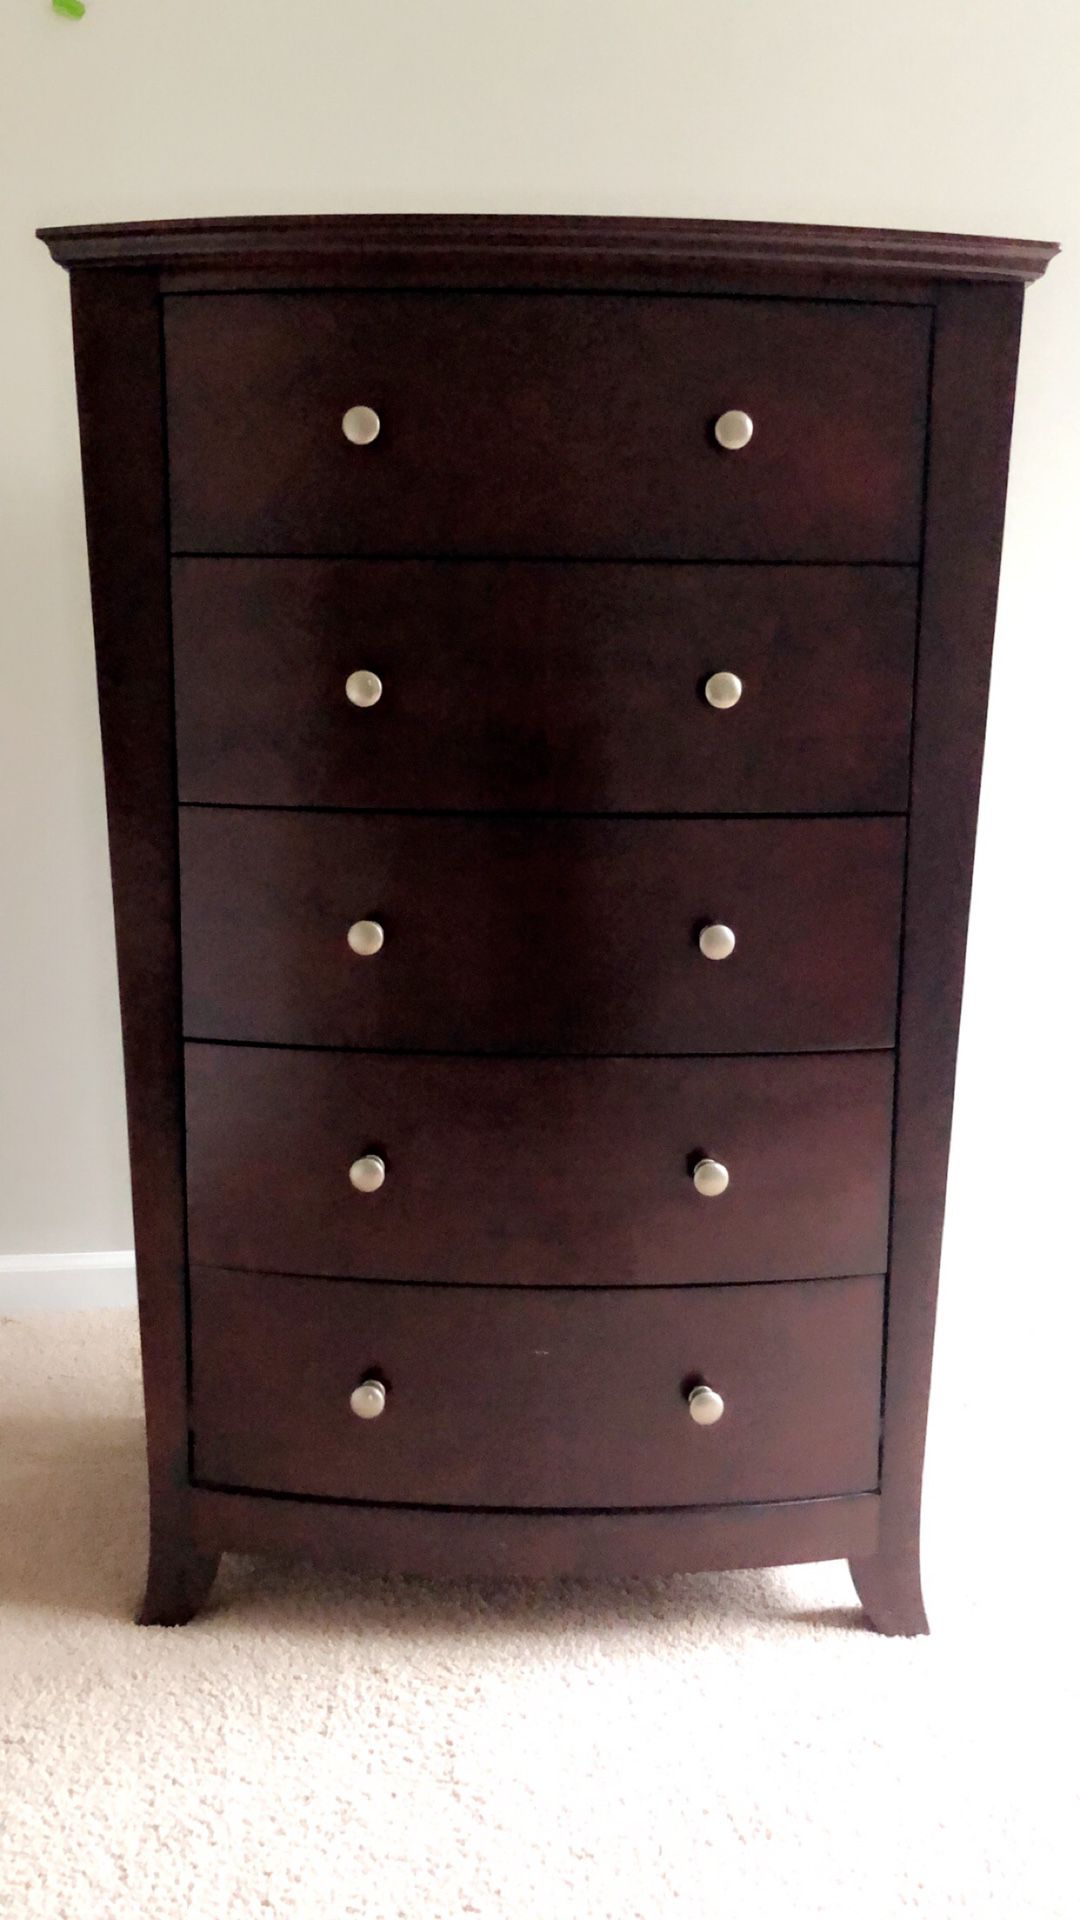 6-drawer tall dresser, dark wood & matching 3-drawer bedside table